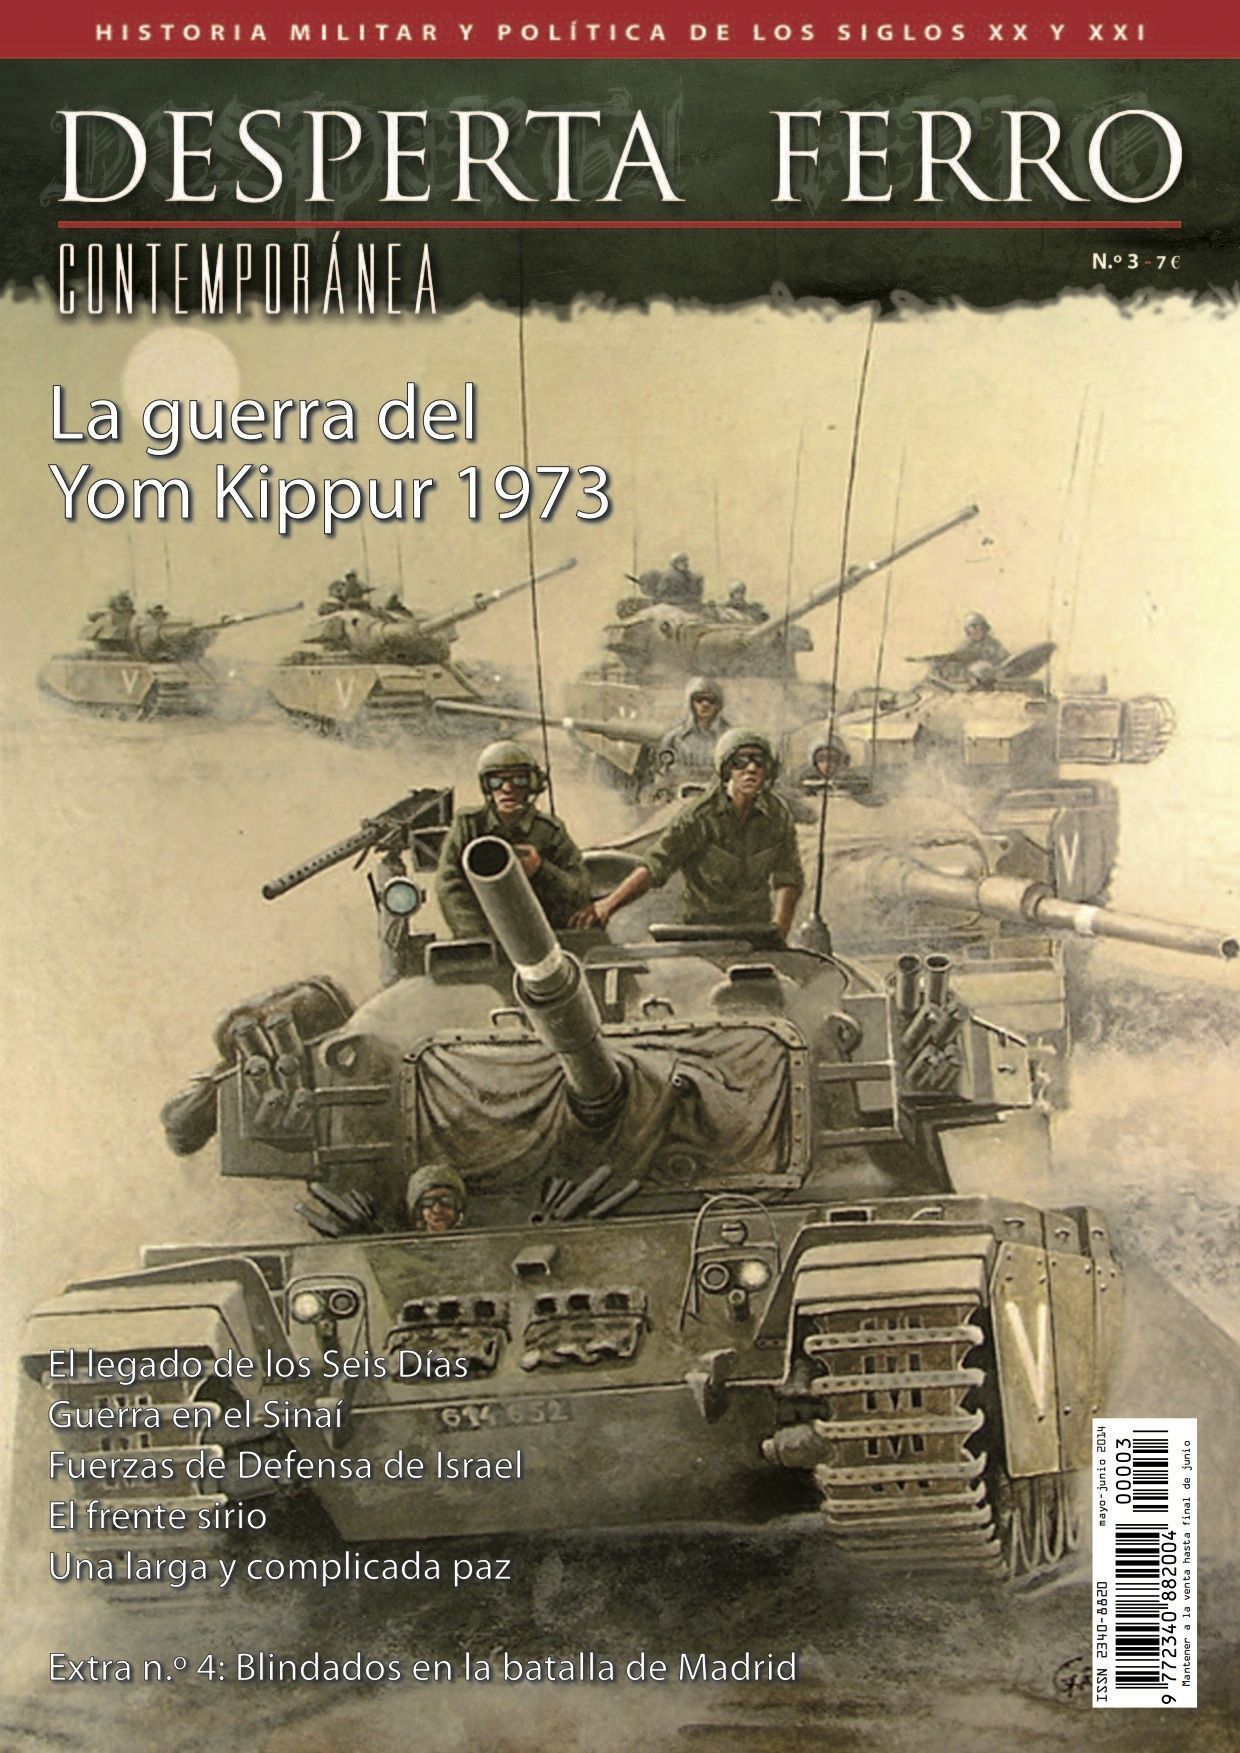 la-guerra-del-yom-kippur-1973-desperta-ferro-contempor-nea-n-3